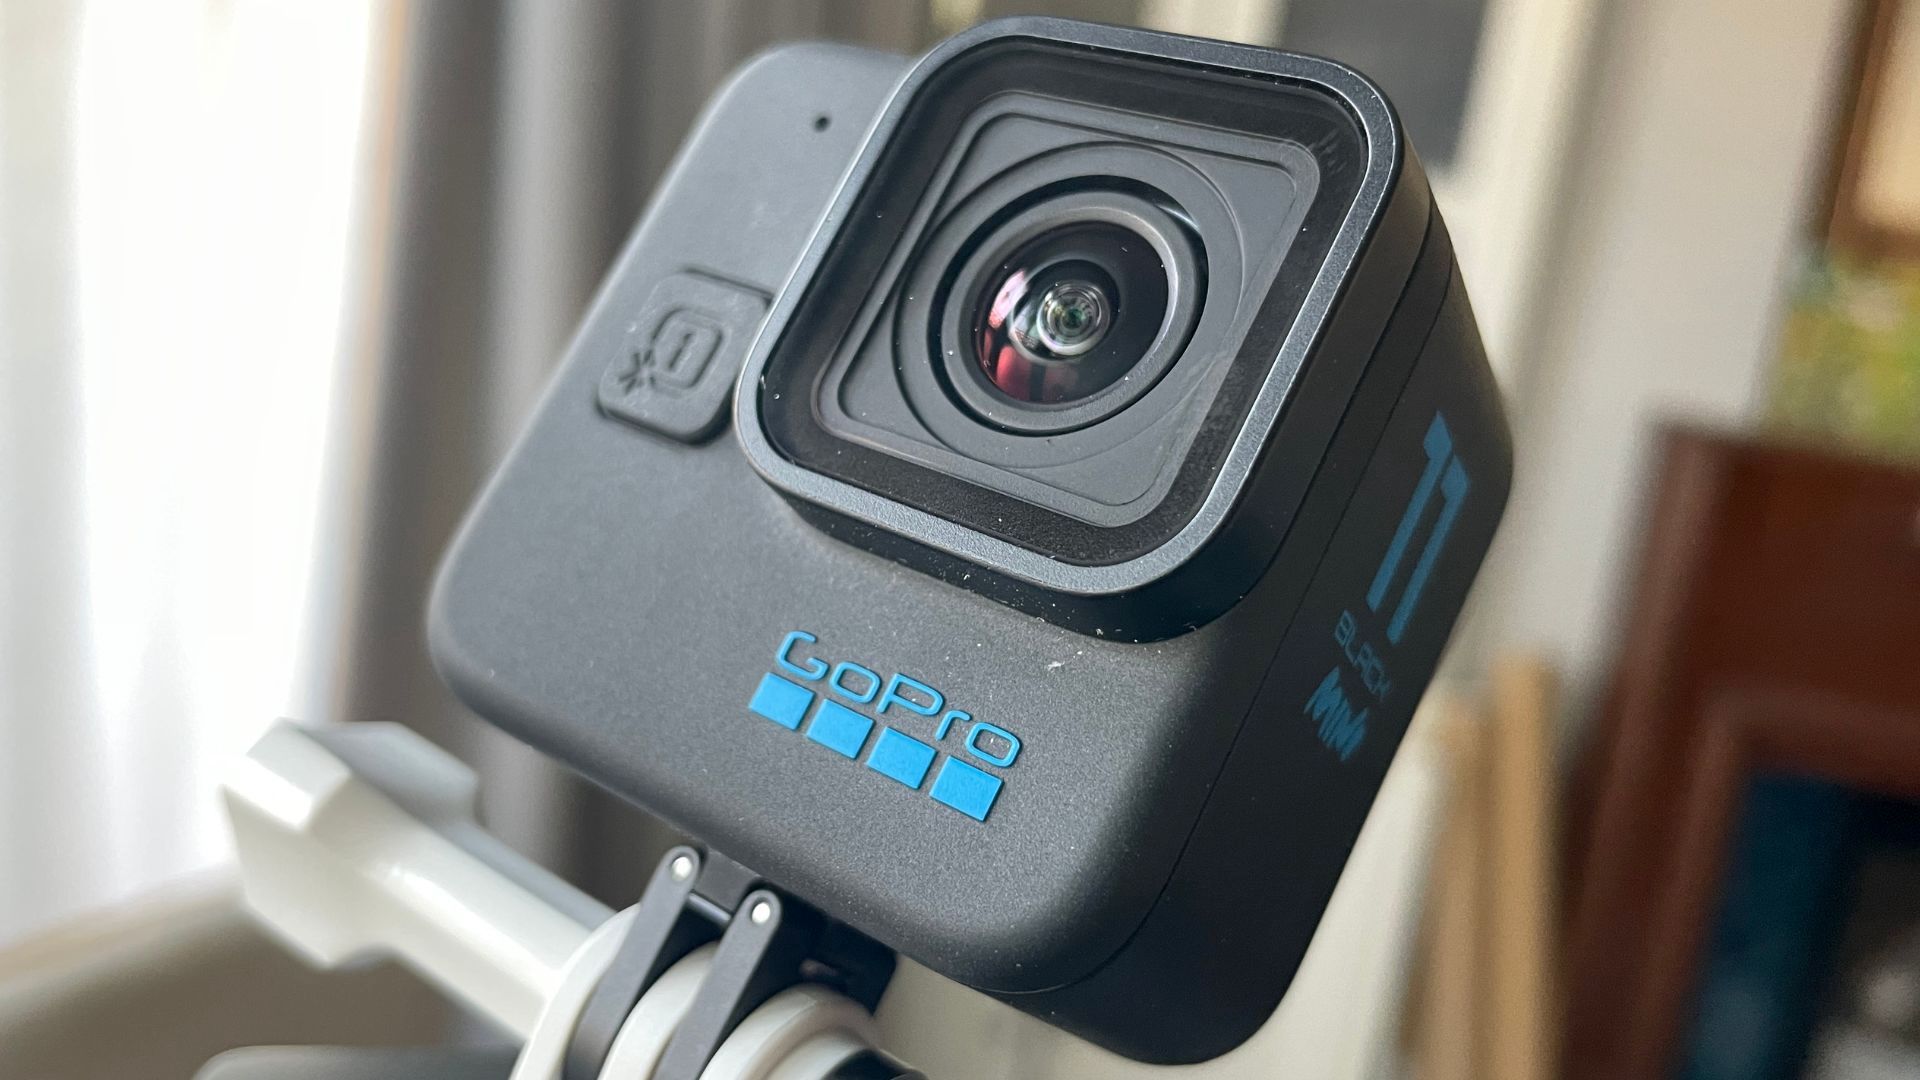 GoPro Hero 11 Black Mini review: Ready! Set! Forget!